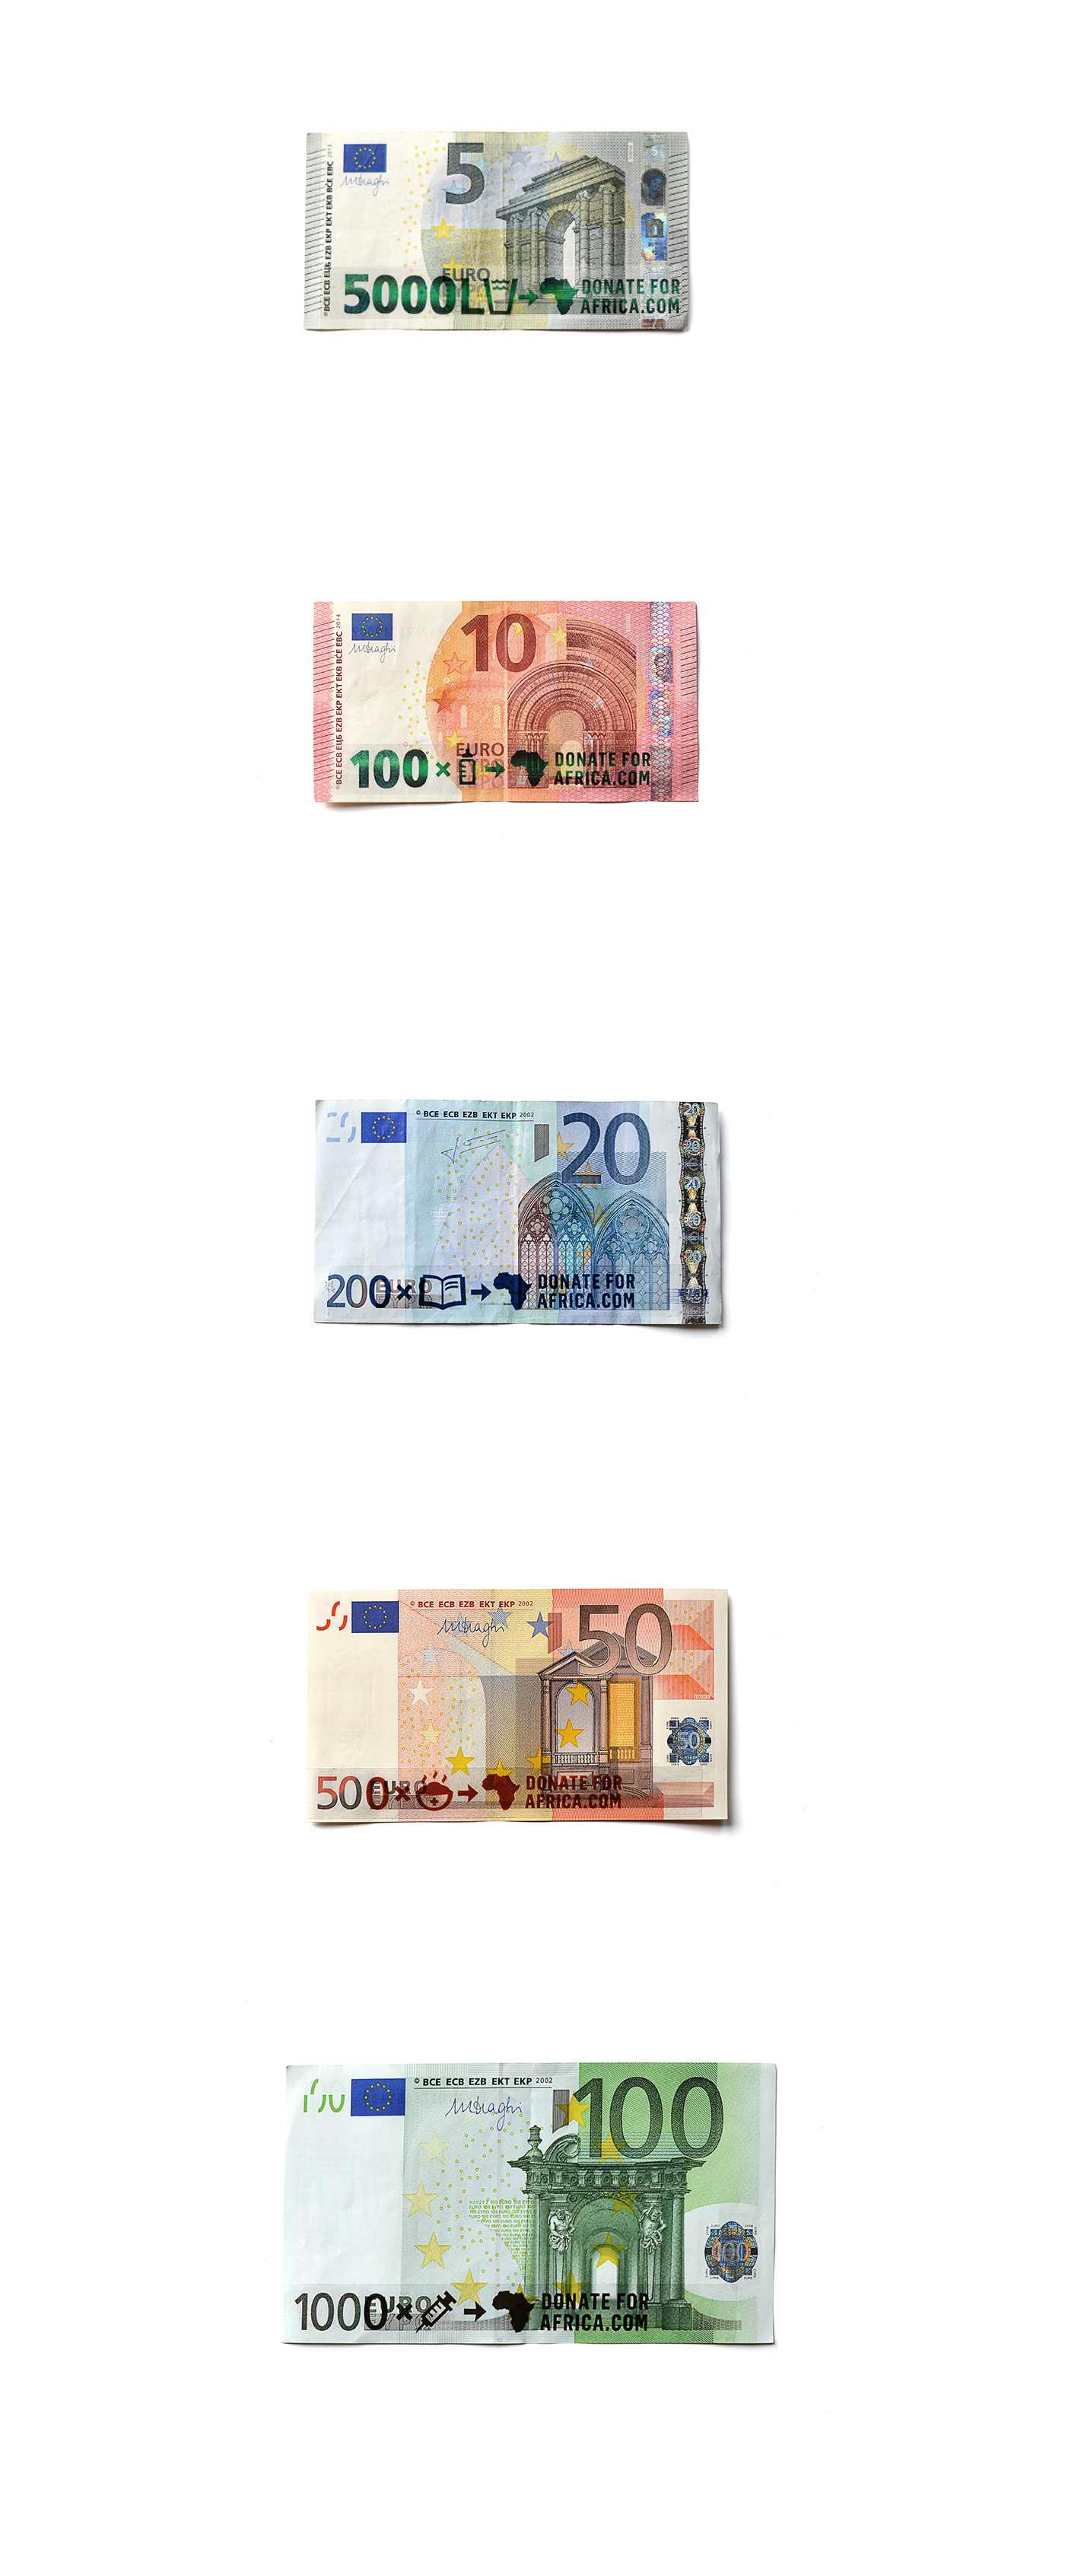 Donate for Africa D&AD money donate winner euro bills sticker